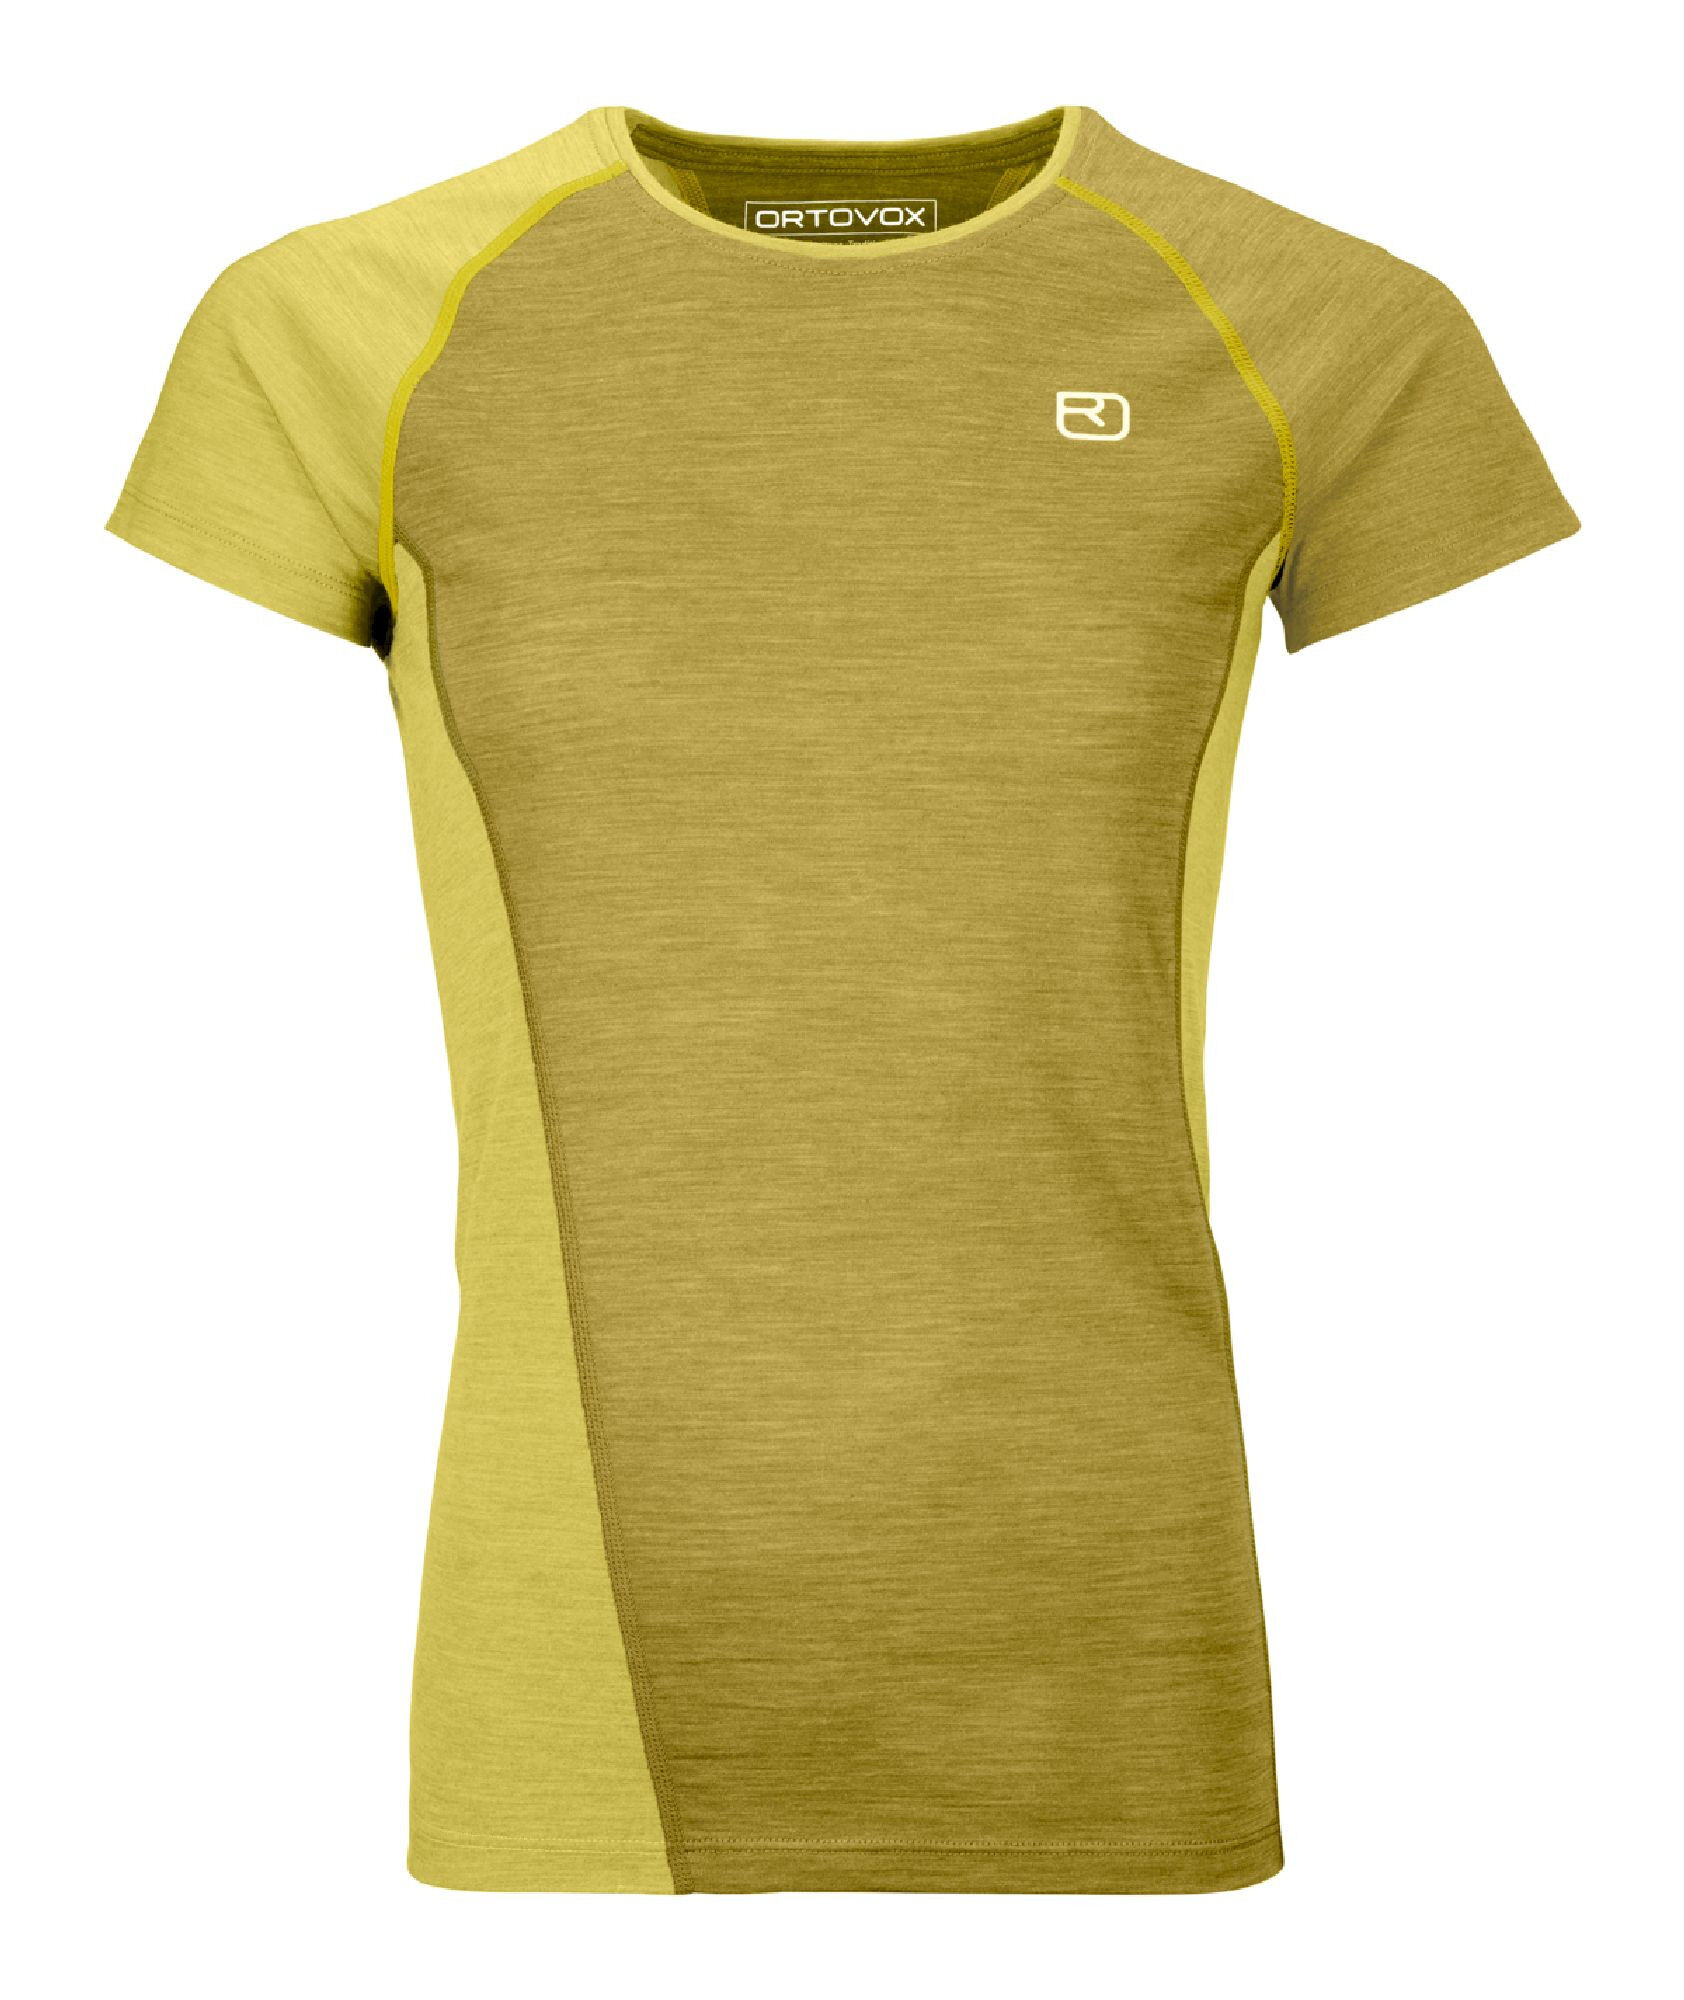 Ortovox 120 Cool Tec Fast Upward - Camiseta lana merino - Mujer